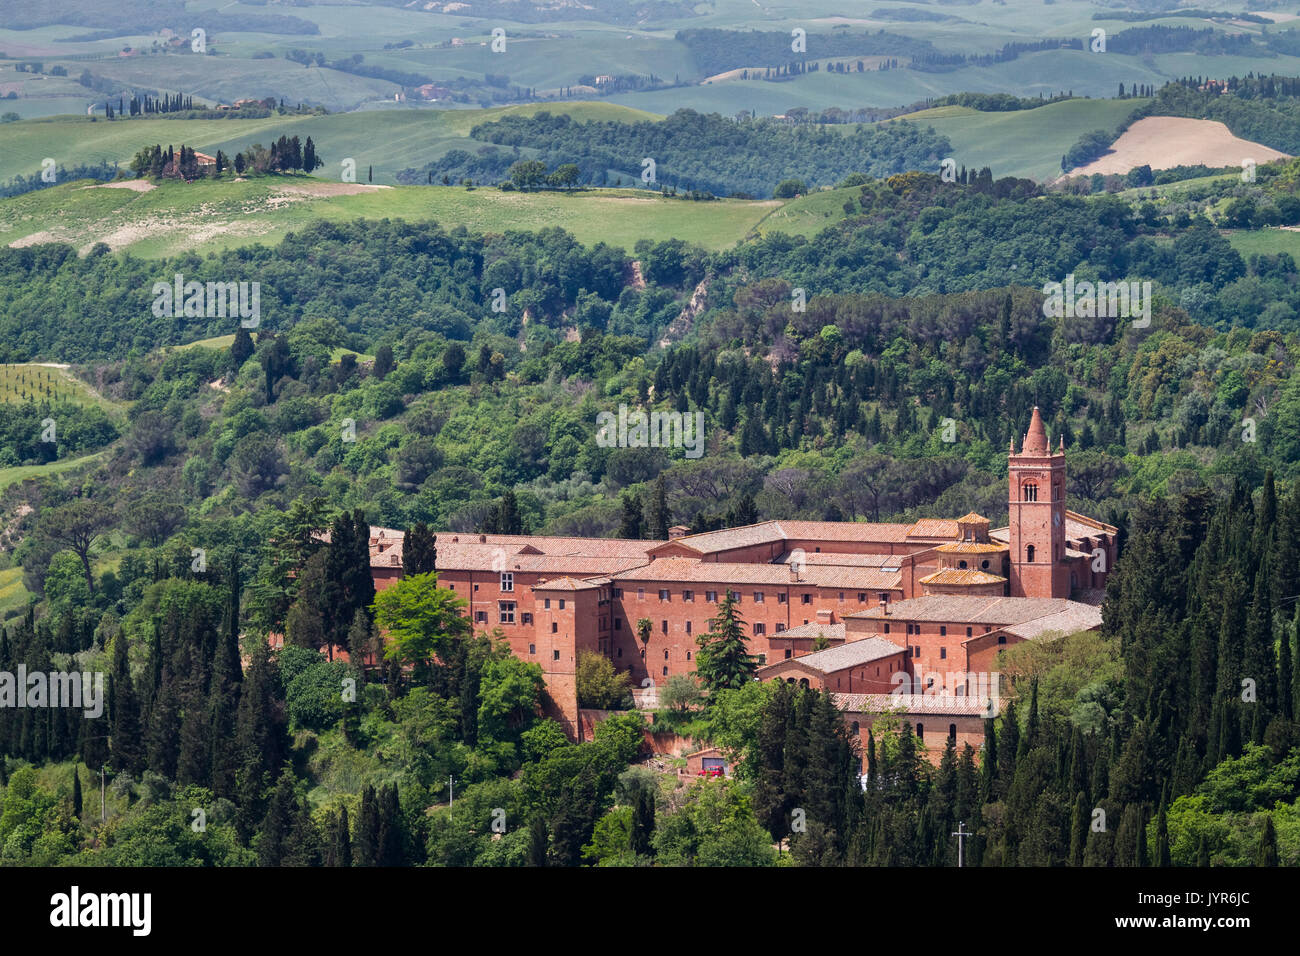 The old benedictine abbey of Monteoliveto Maggiore, Asciano, Val d'Orcia, Tuscany, Italy. Stock Photo